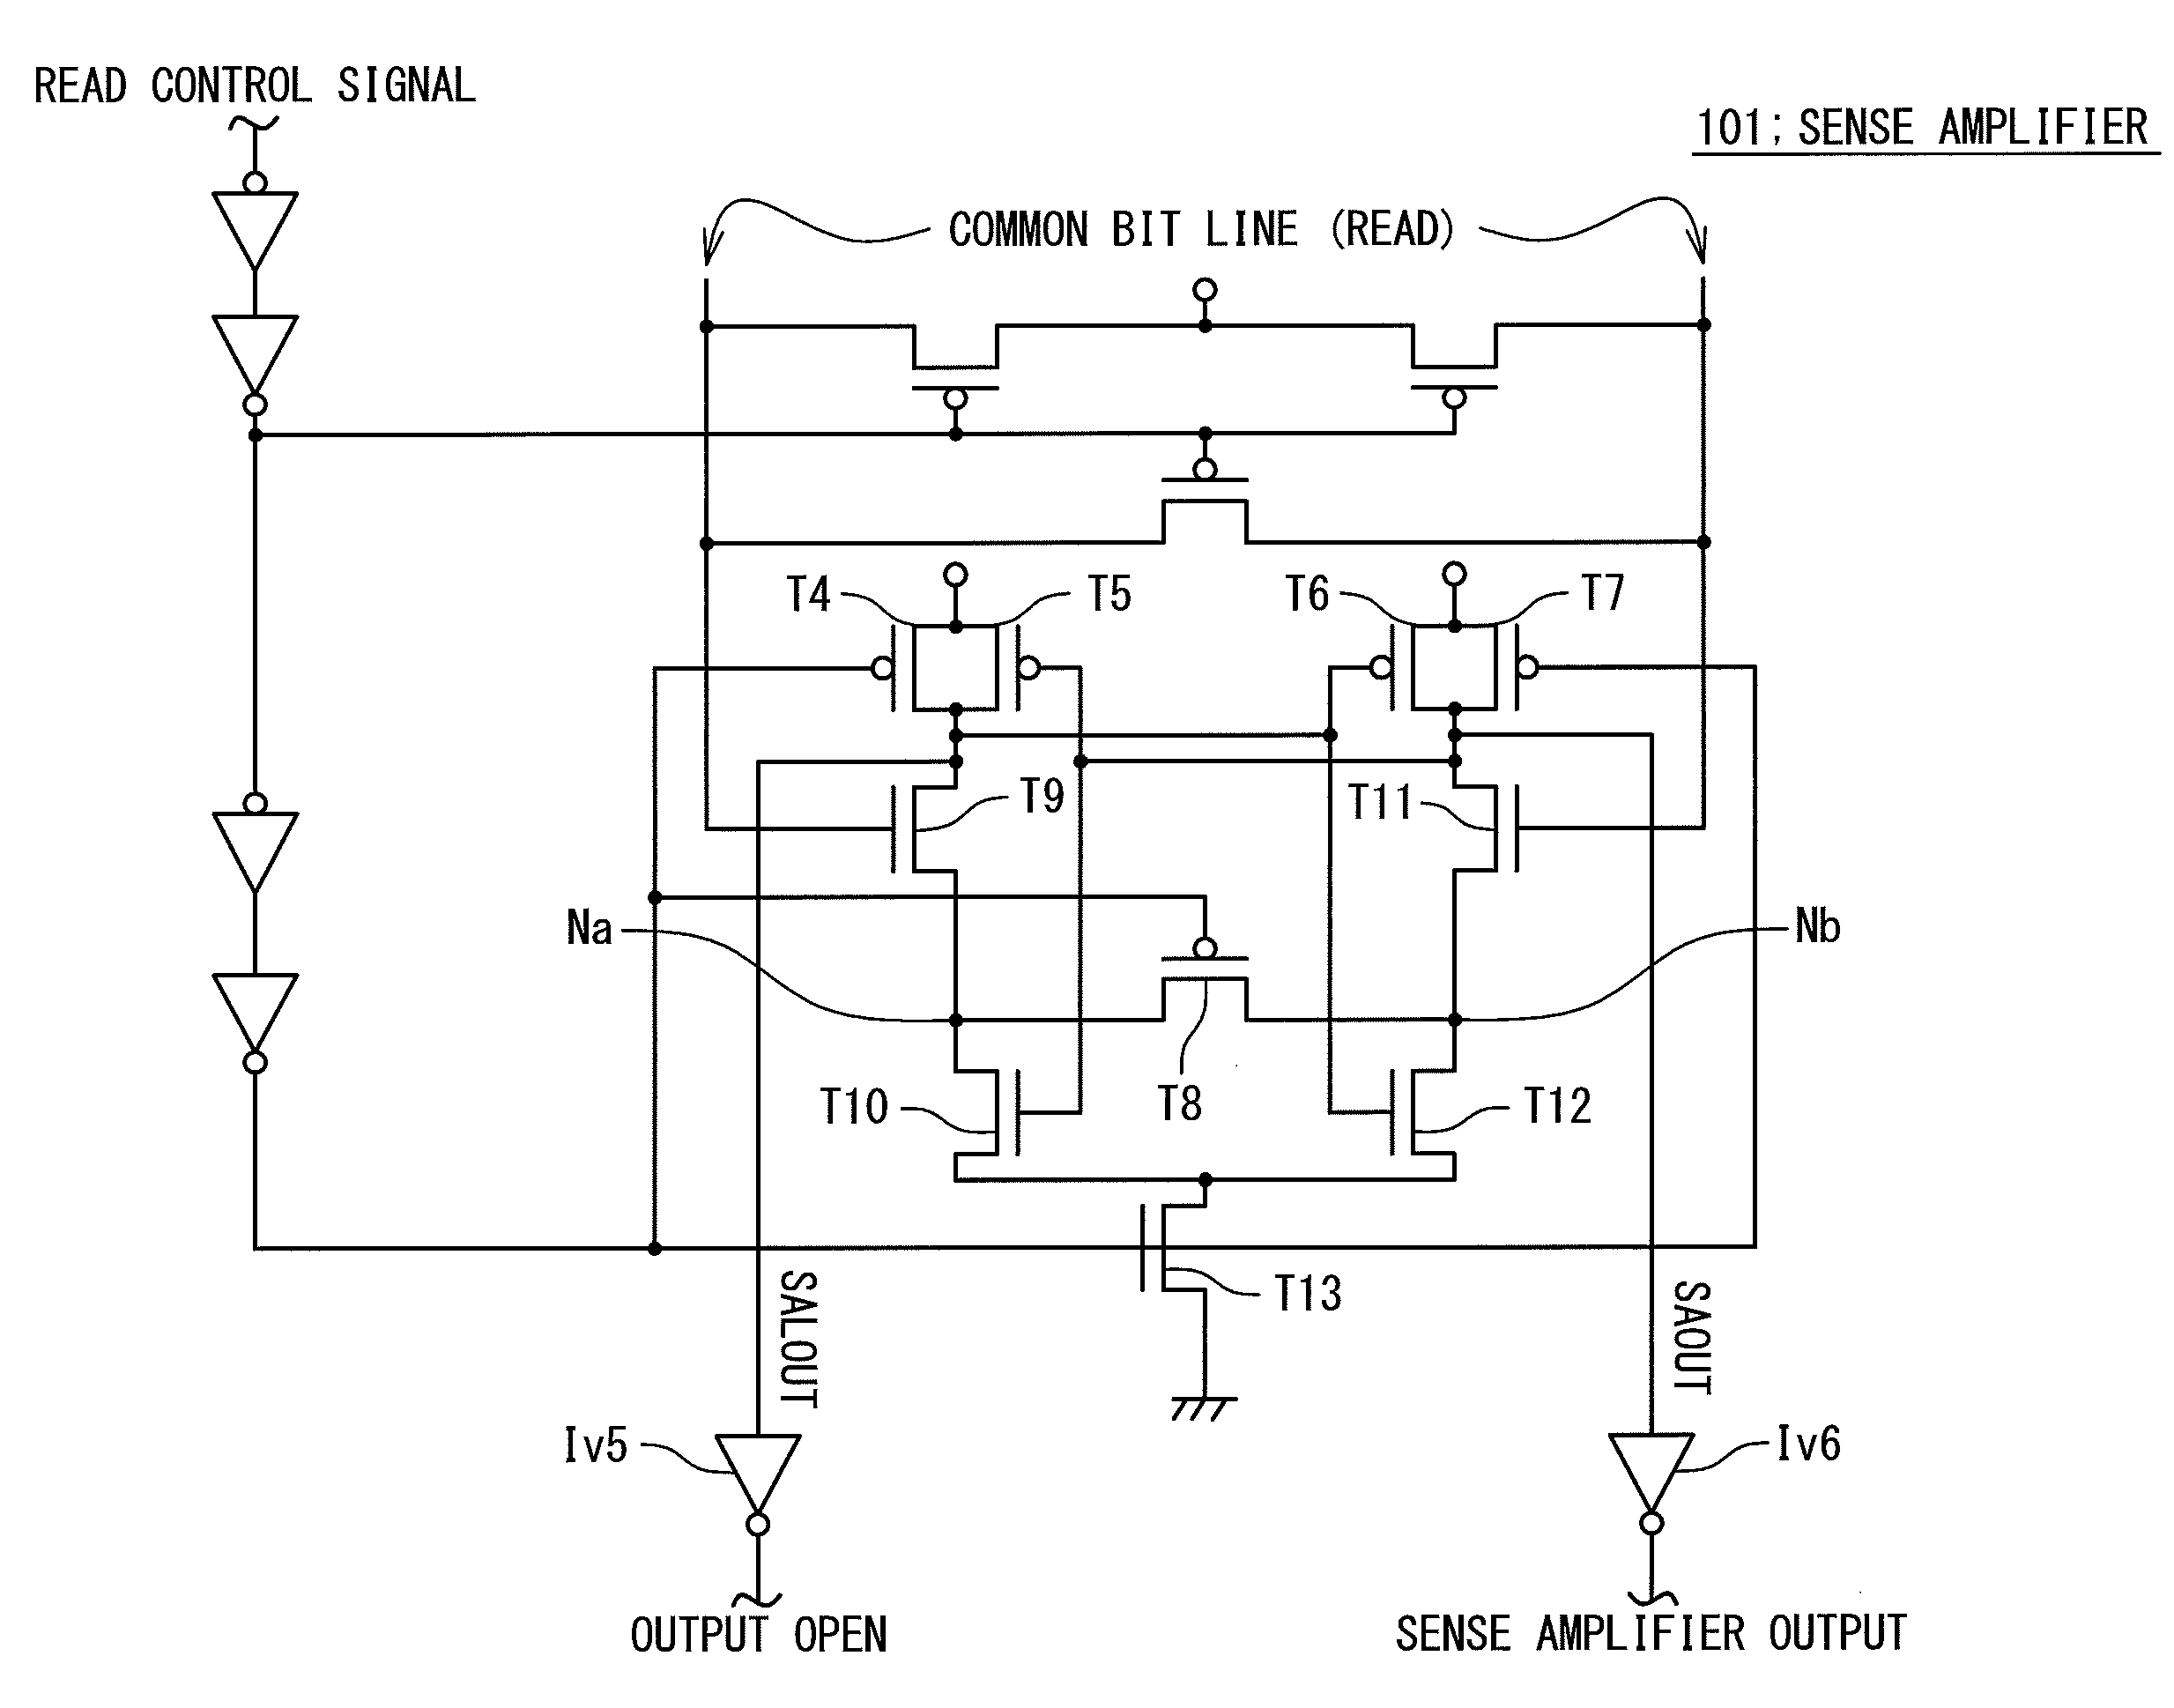 Sense amplifier and semiconductor memory device having sense amplifier